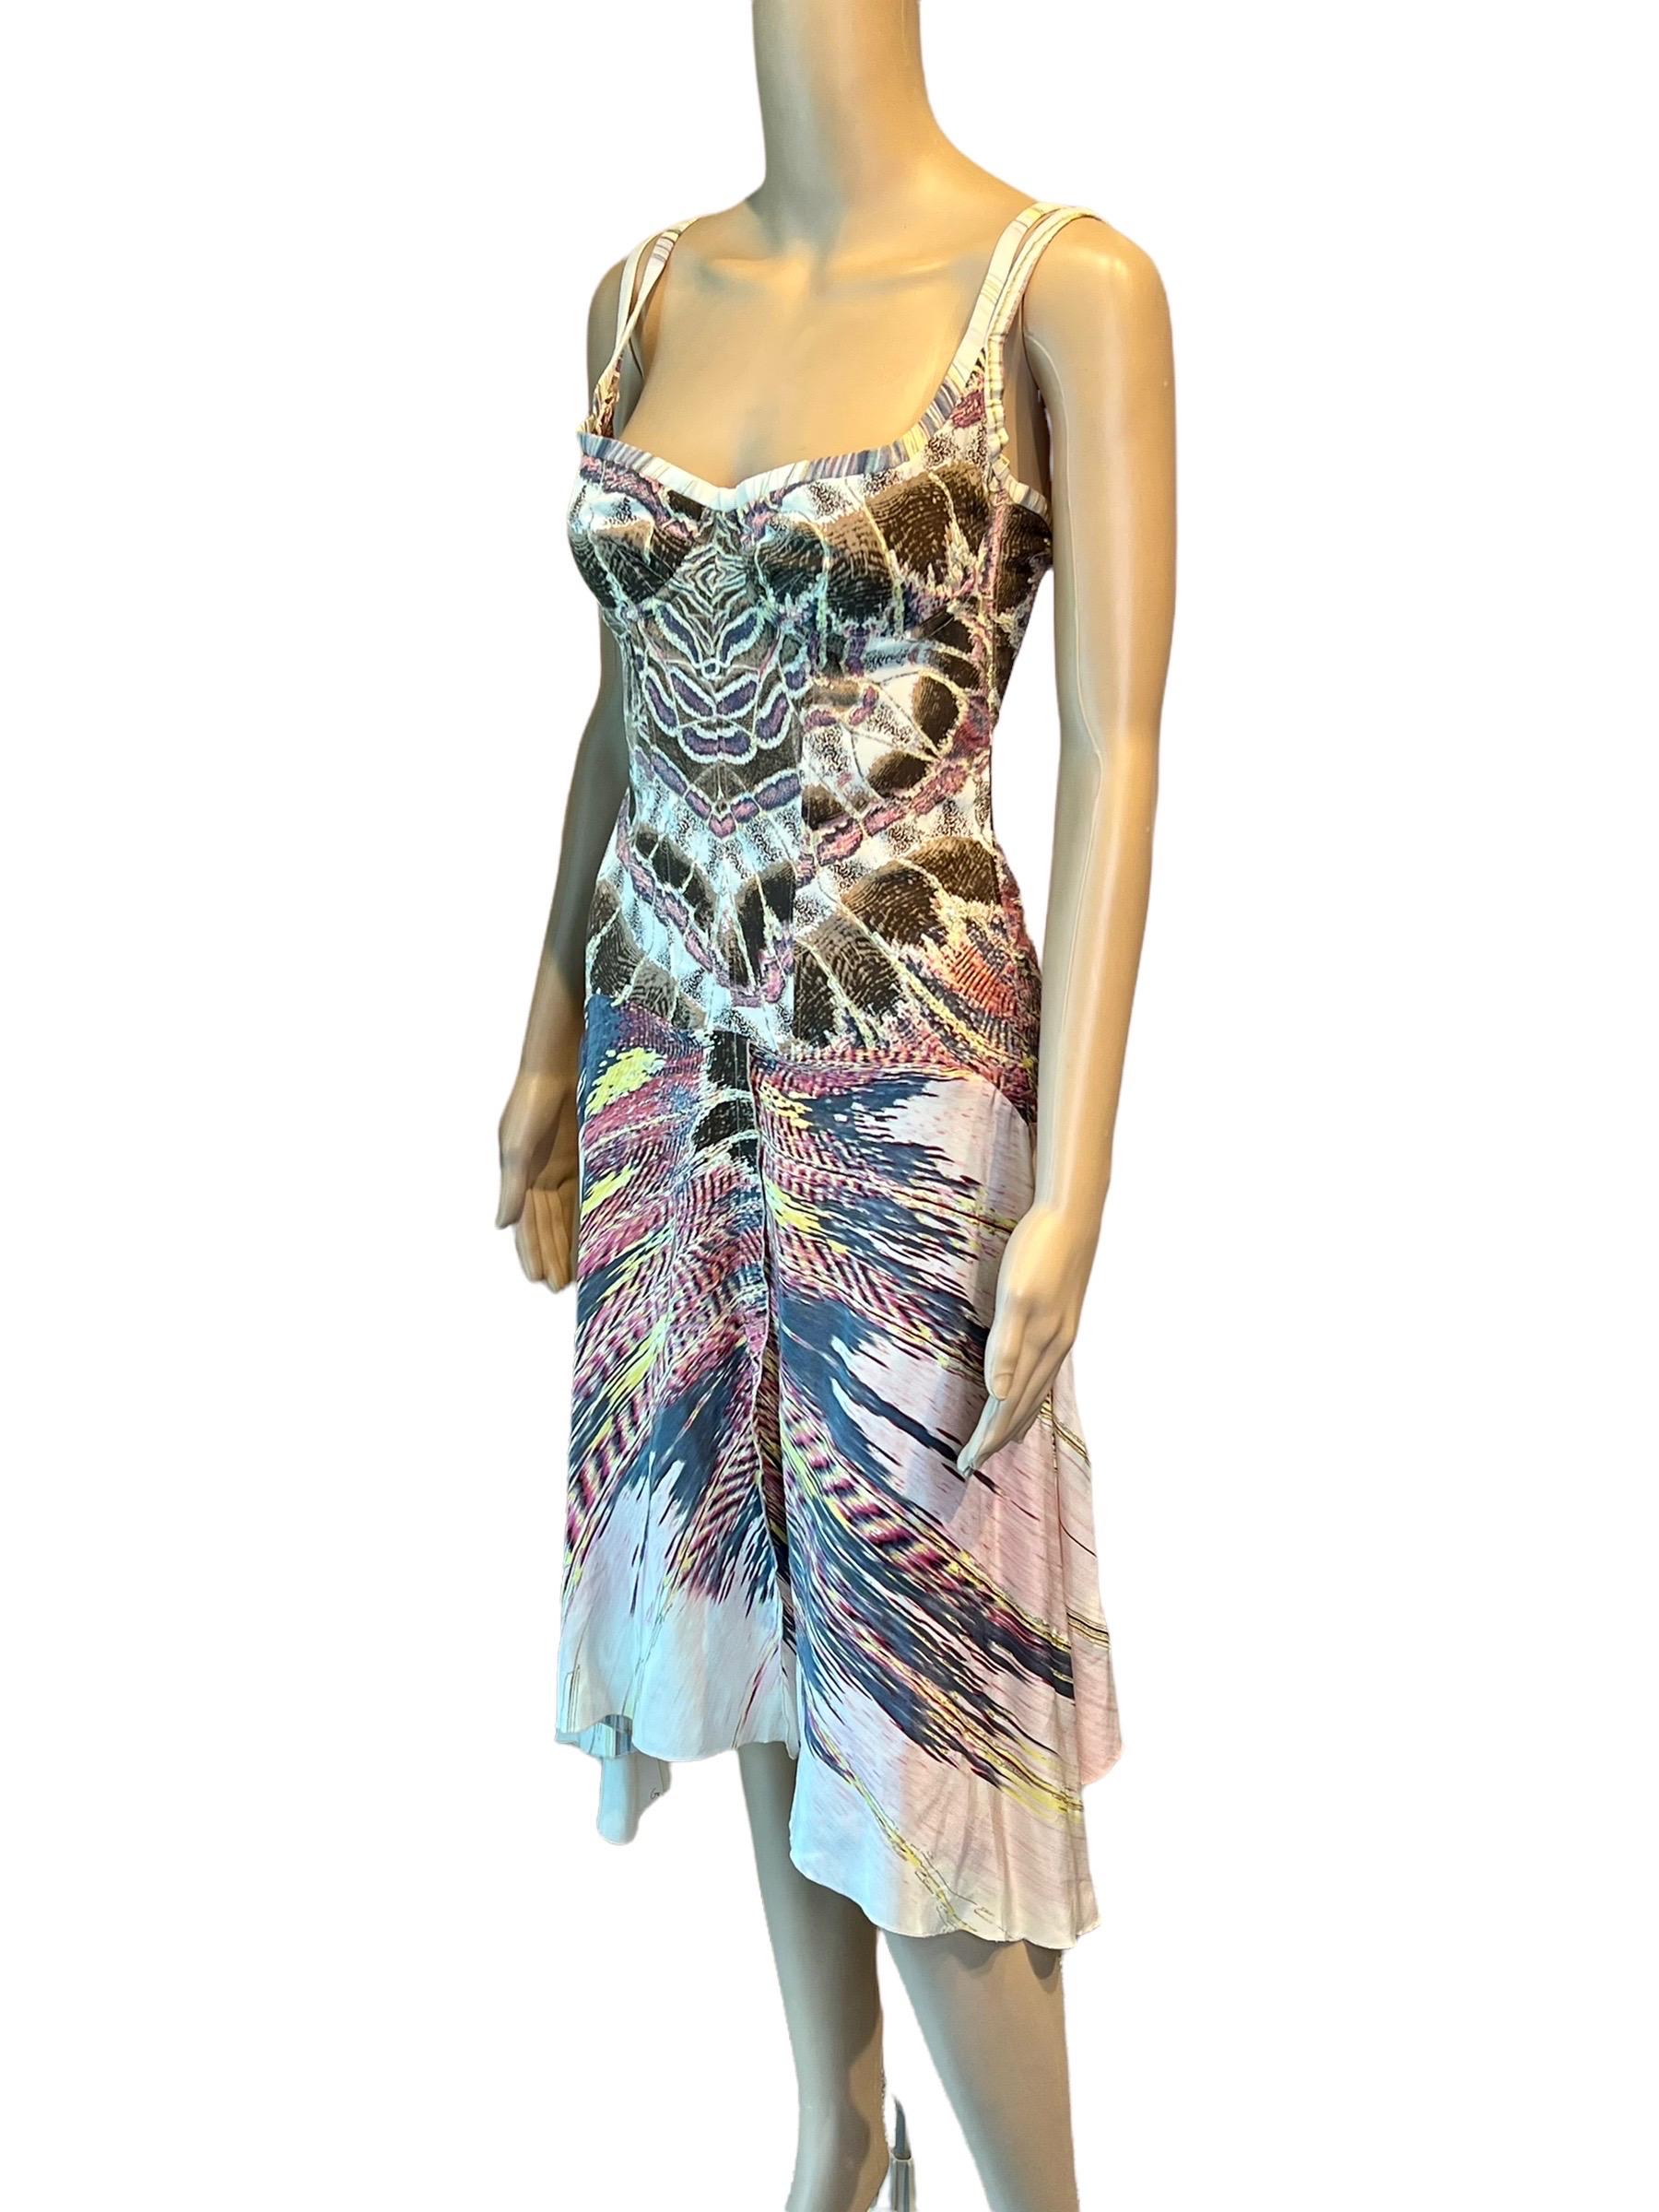 Women's Roberto Cavalli S/S 2004 Bustier Corset Plunging Neckline Feather Print Dress For Sale